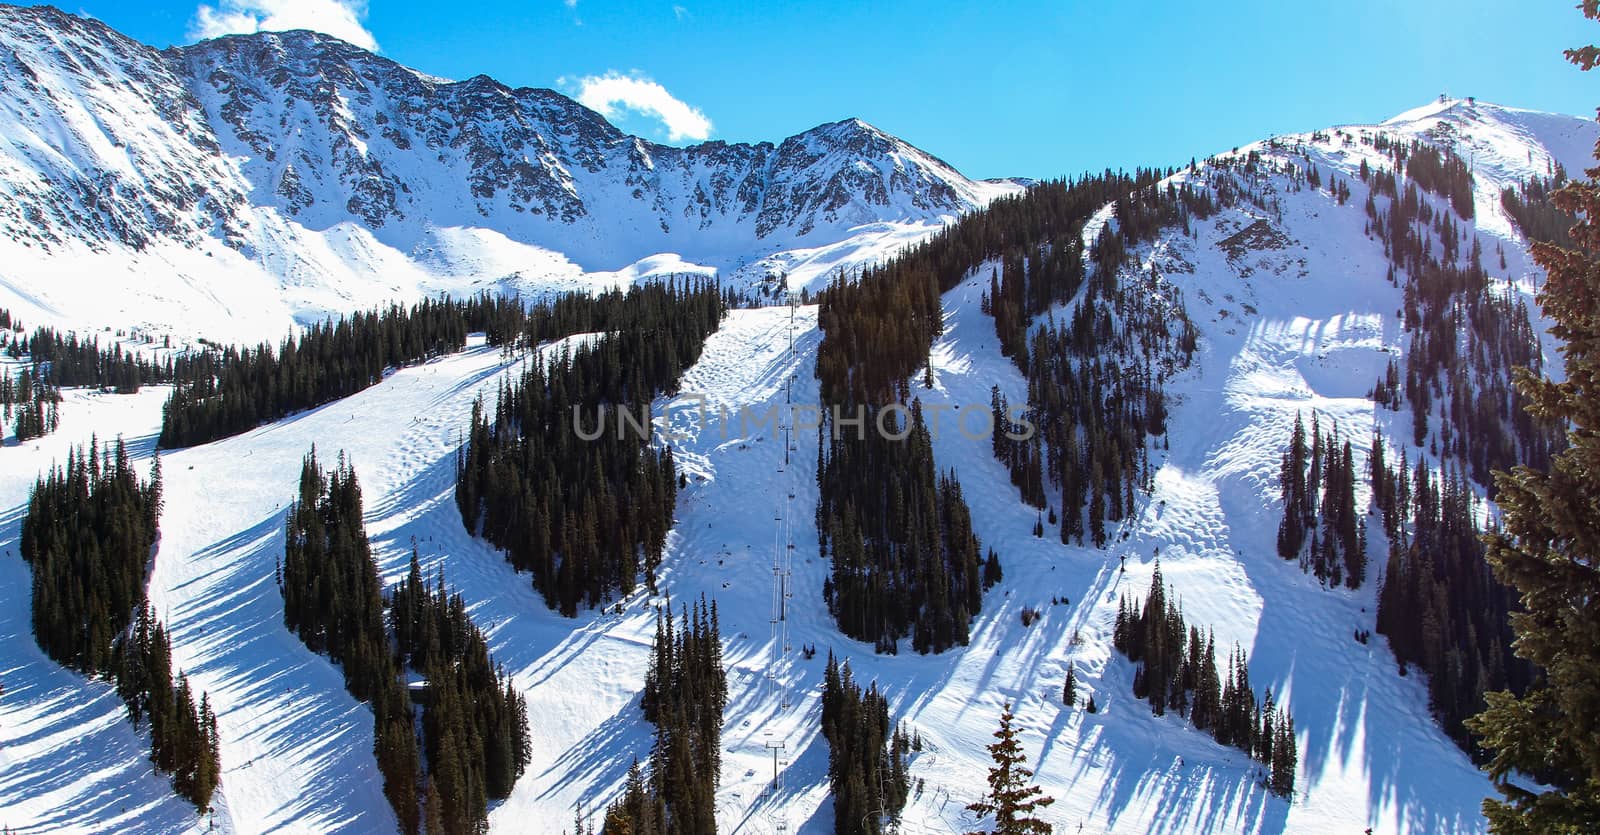 Colorado Ski Slopes on a Bright Sunny Day by kreativepics